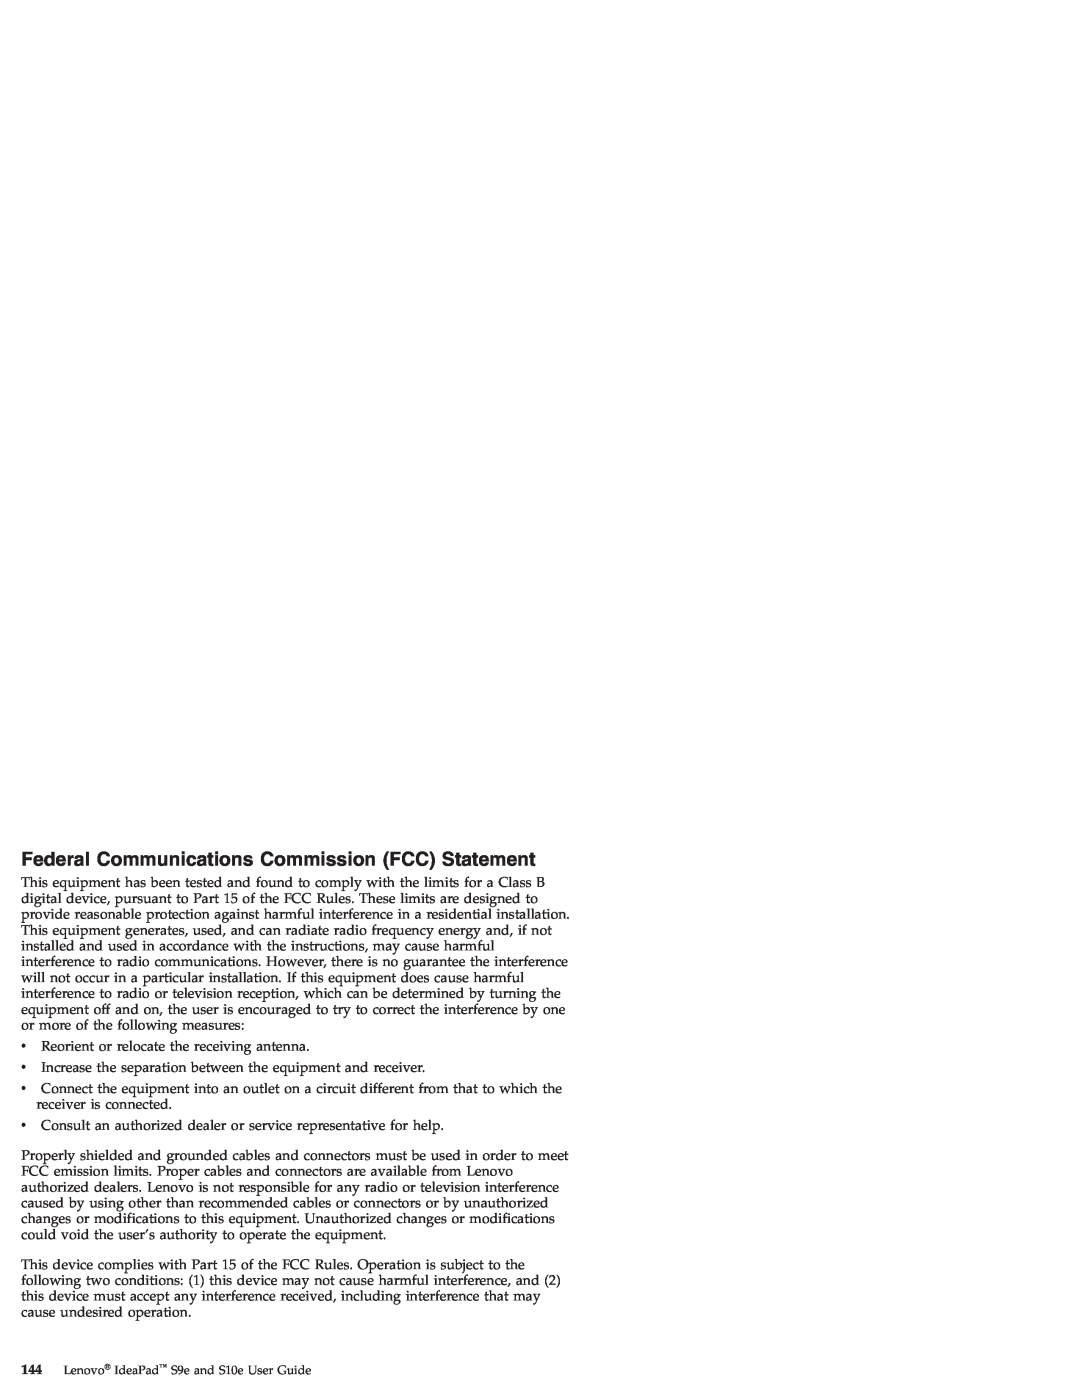 Lenovo S10E, S9E manual Federal Communications Commission FCC Statement 